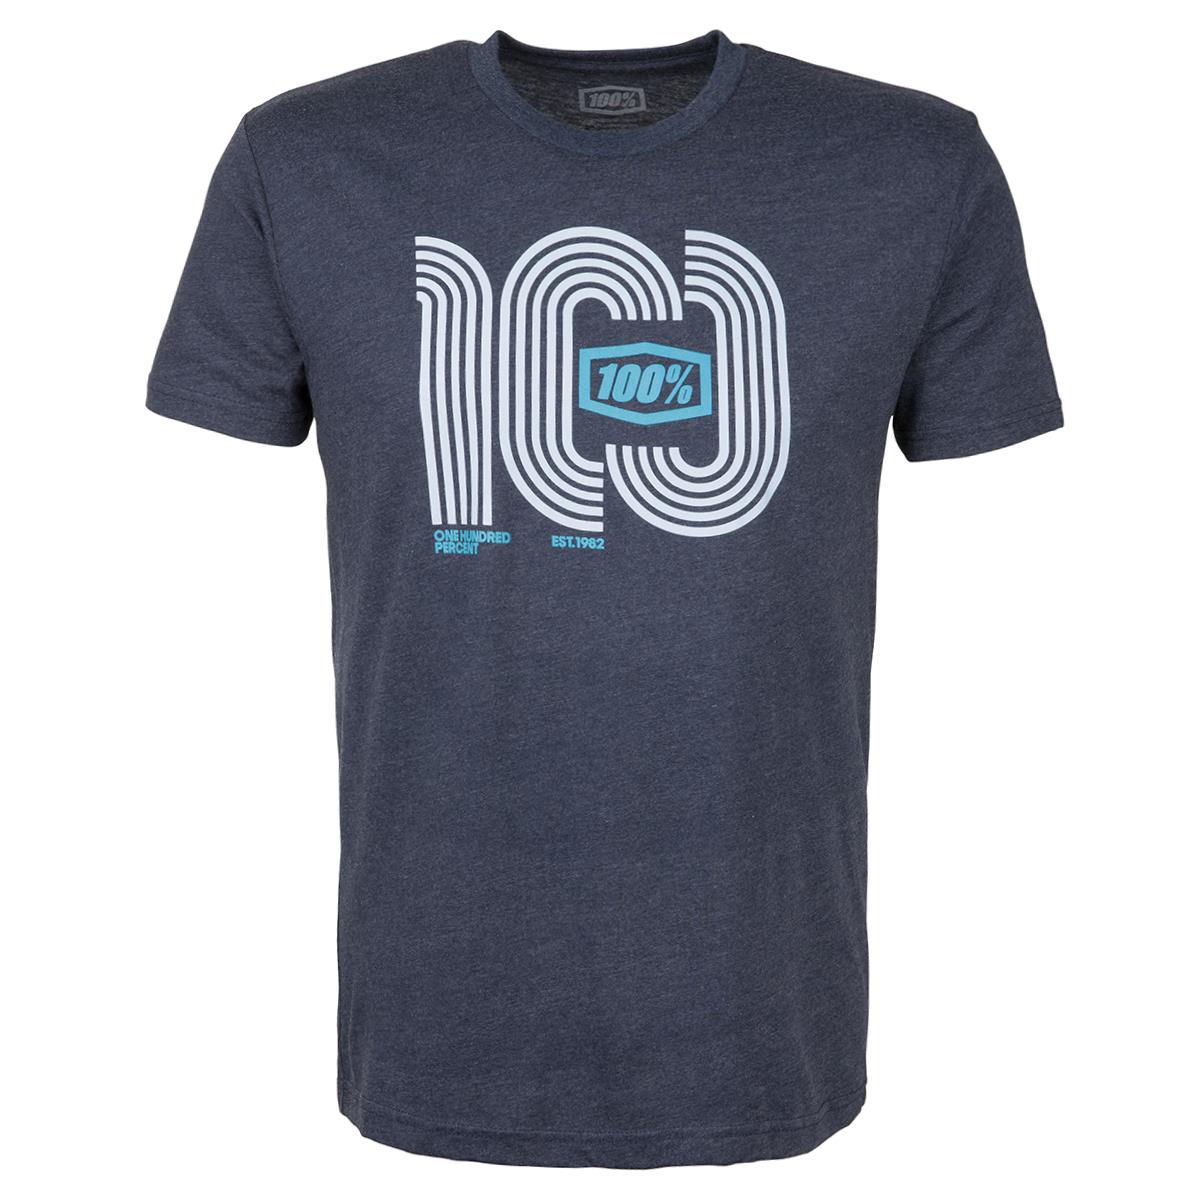 100% T-Shirt Hairpin Navy